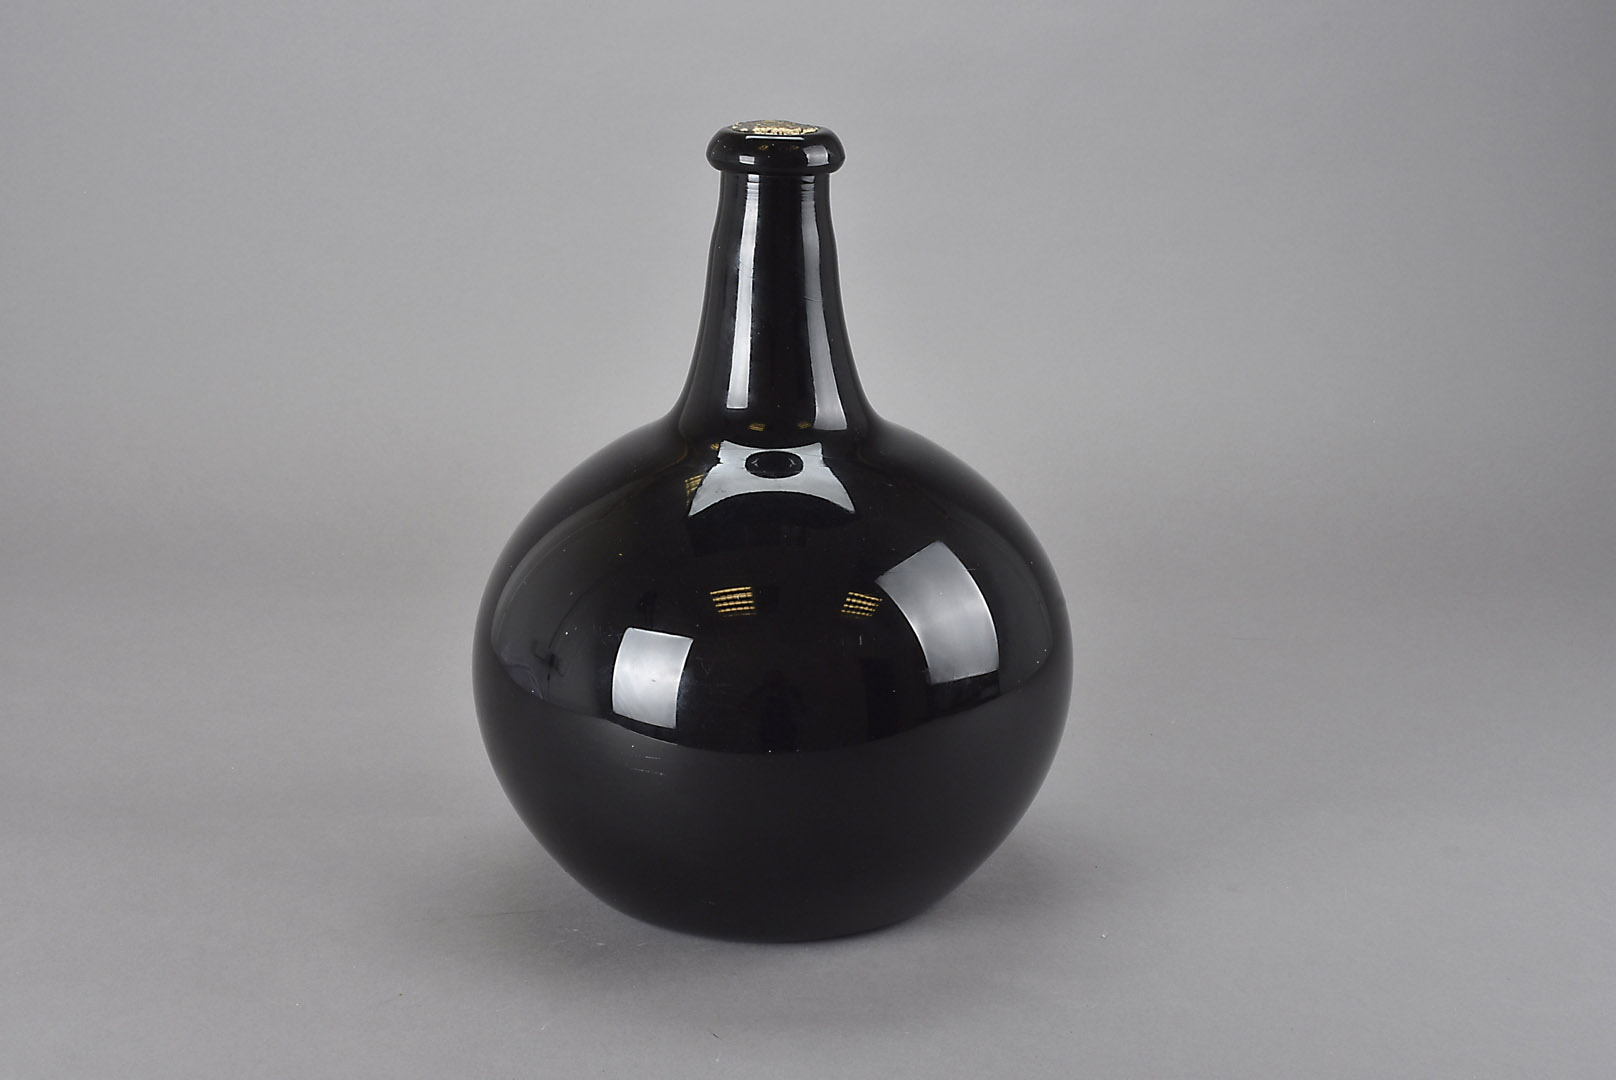 An 18th century amethyst glass sealed magnum onion wine bottle, the dark purple glass of generous